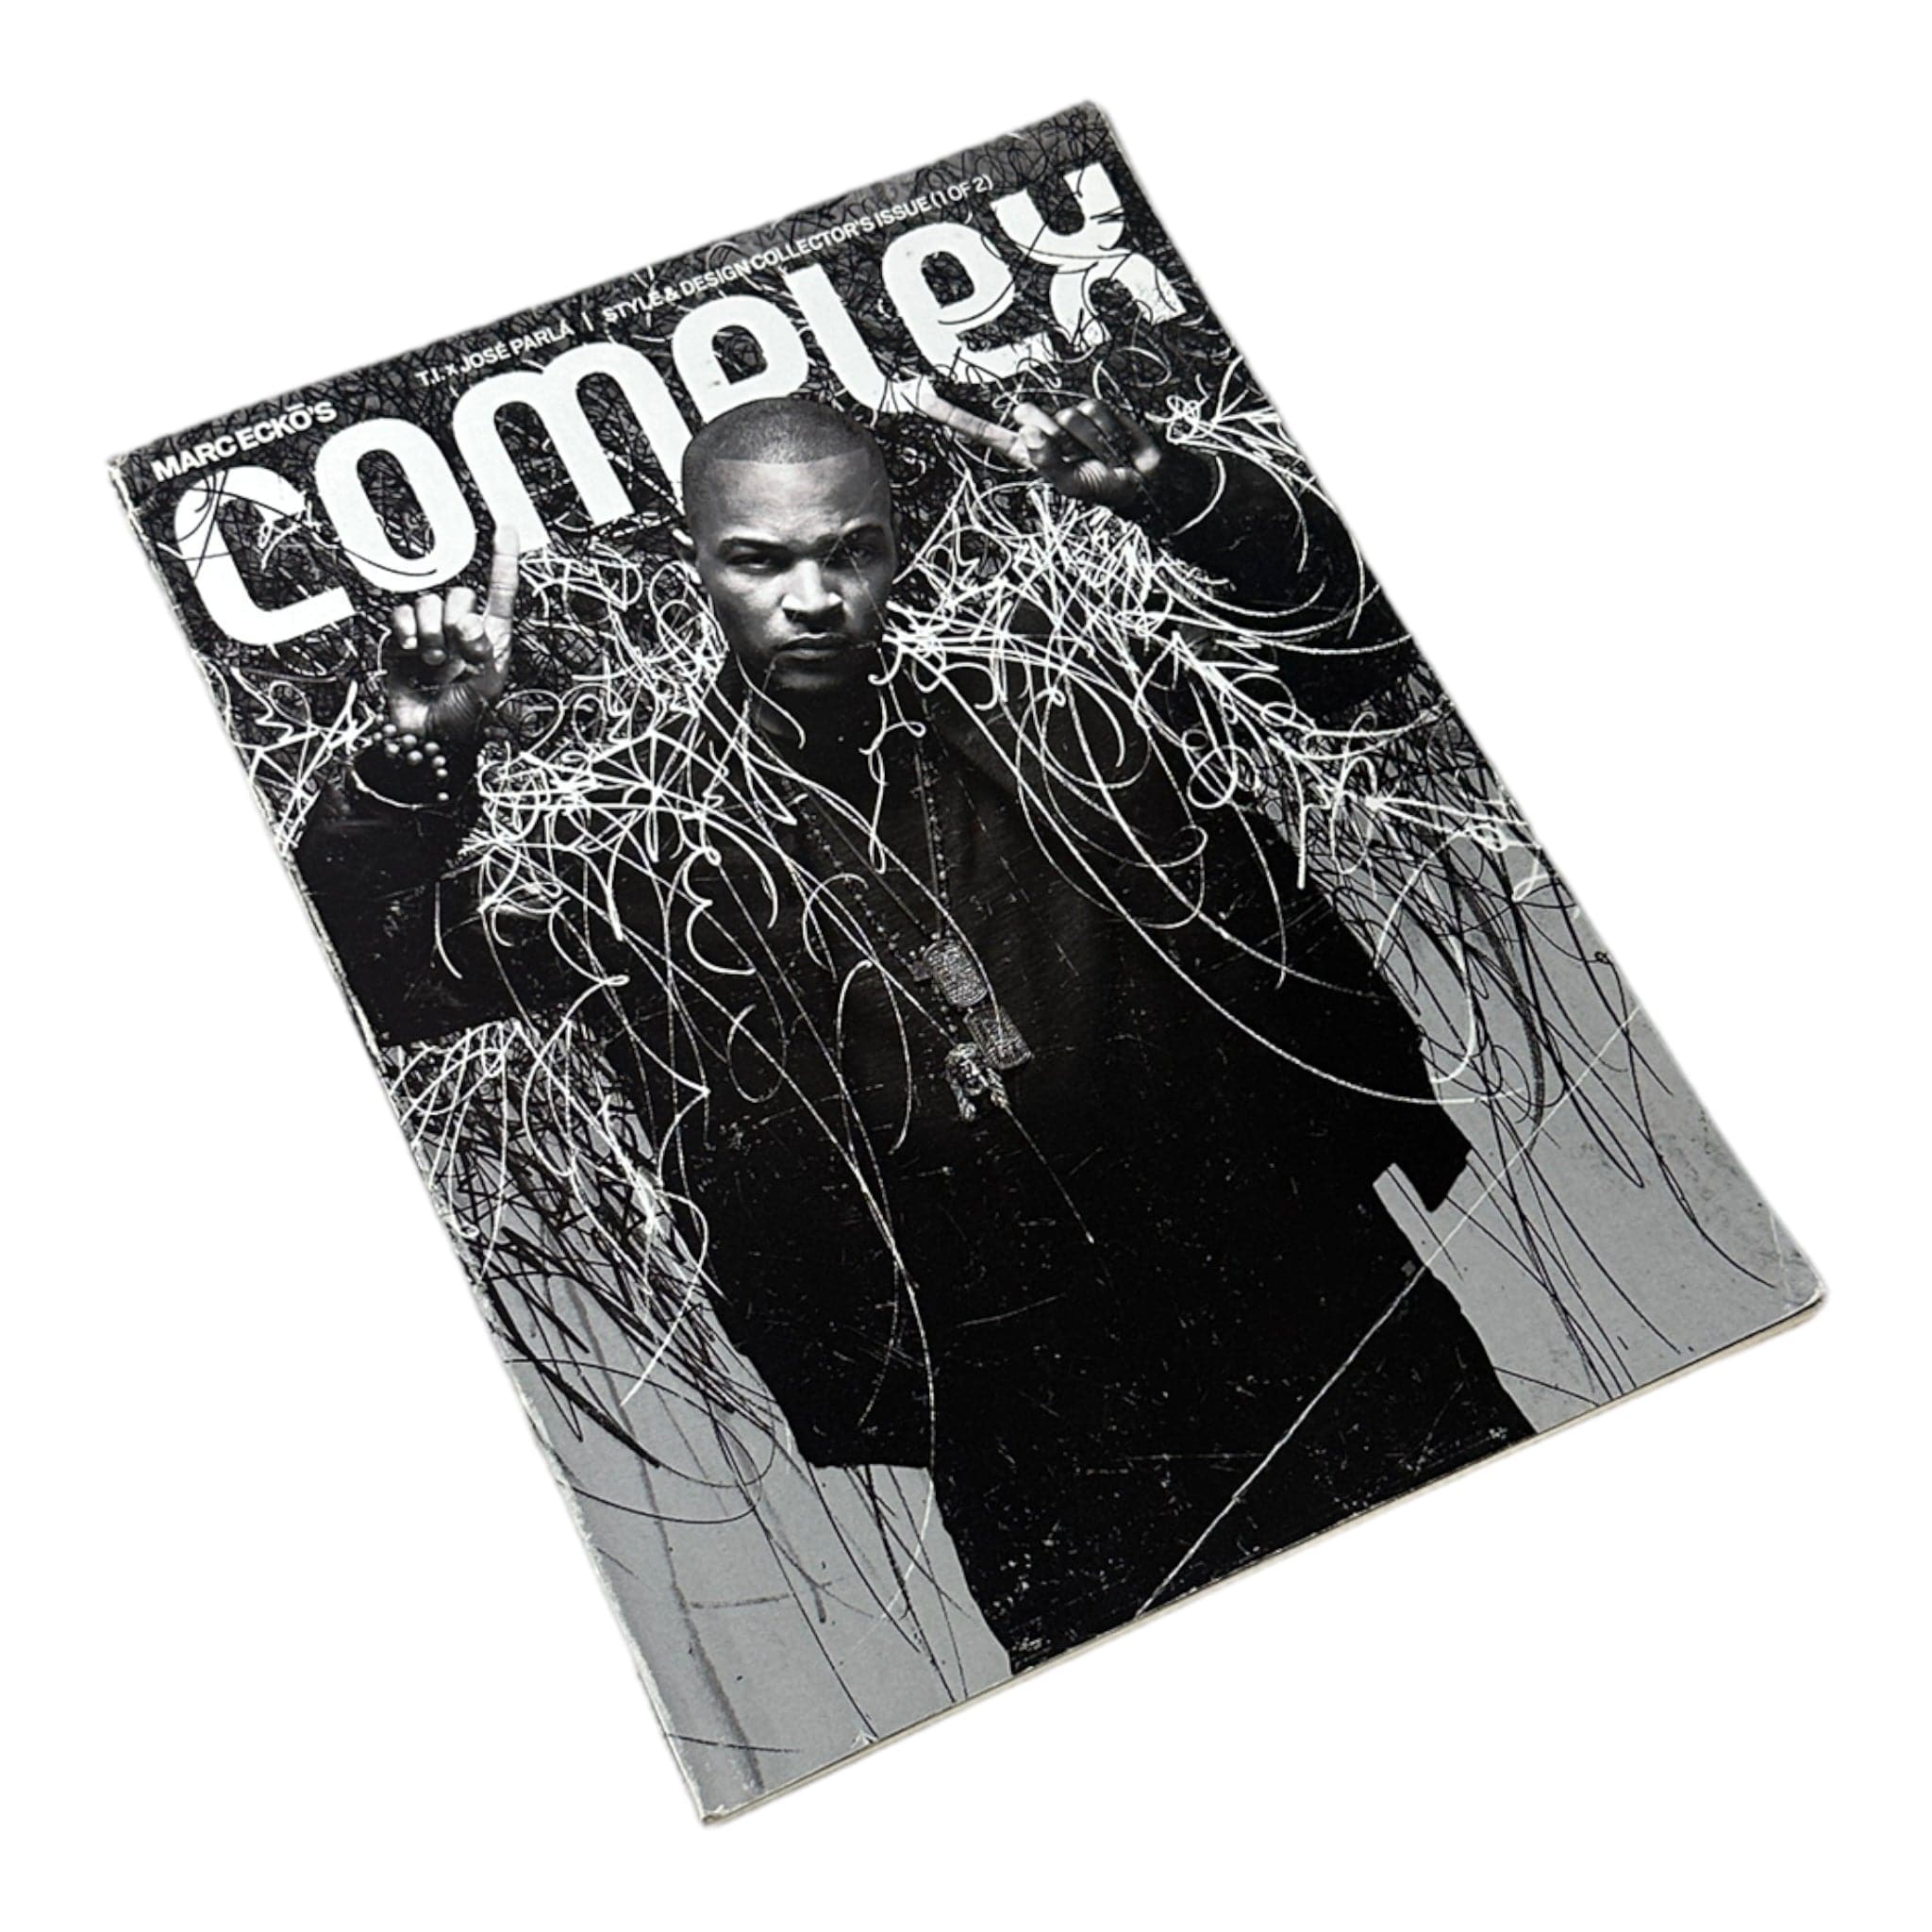 COMPLEX MAGAZINE - T.I. &amp; LINSDAY LOHAN DOUBLE COVER - The Magnolia Park